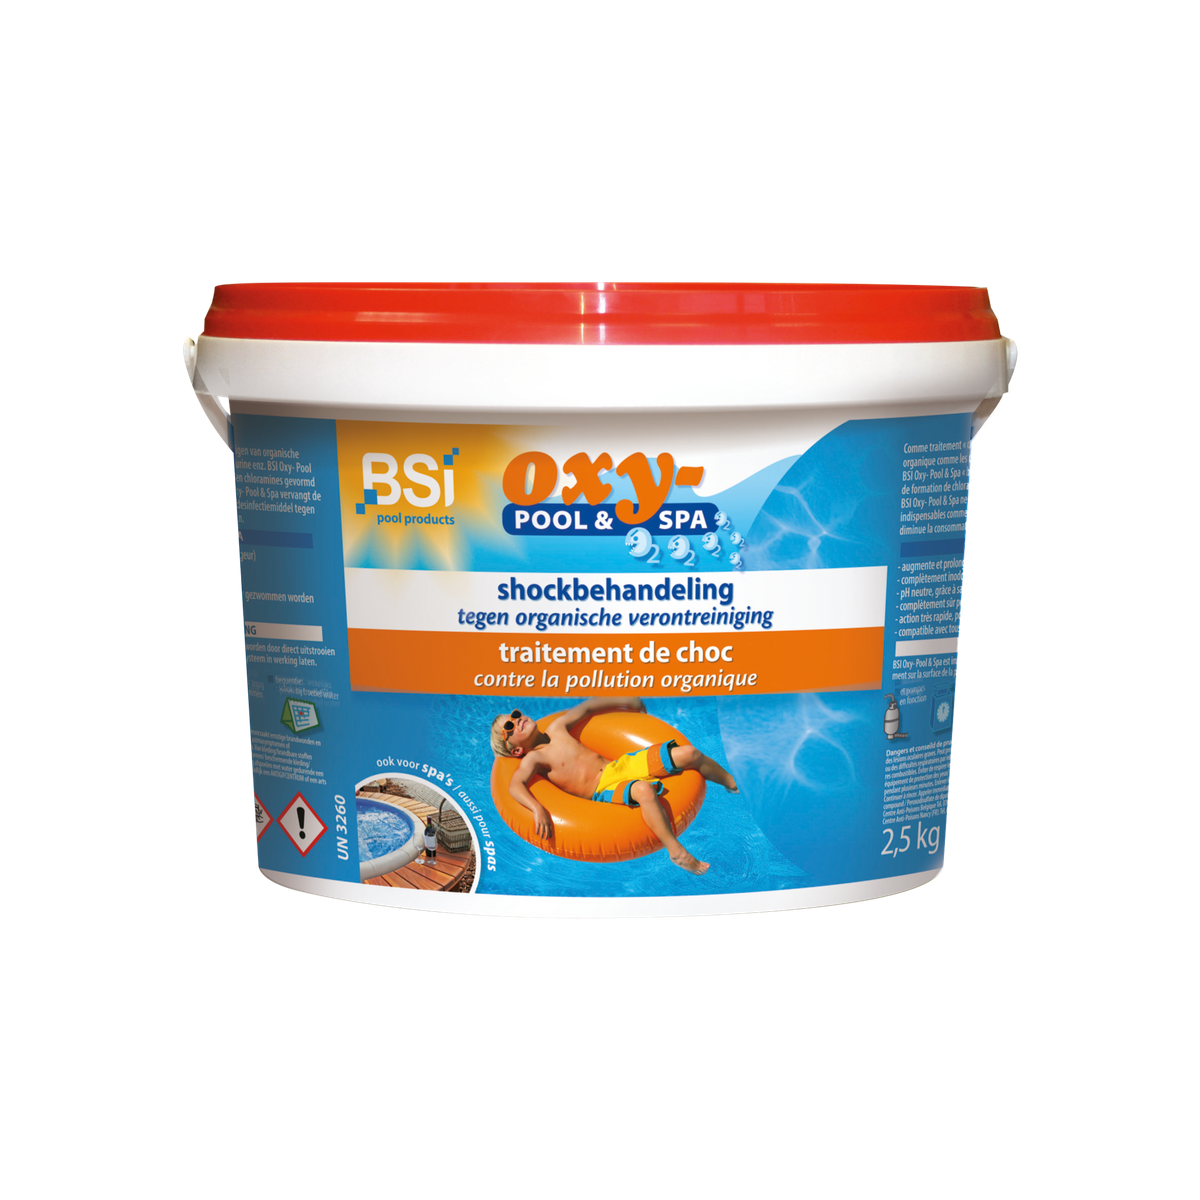 BSI Oxy-pool & spa 2.5kg